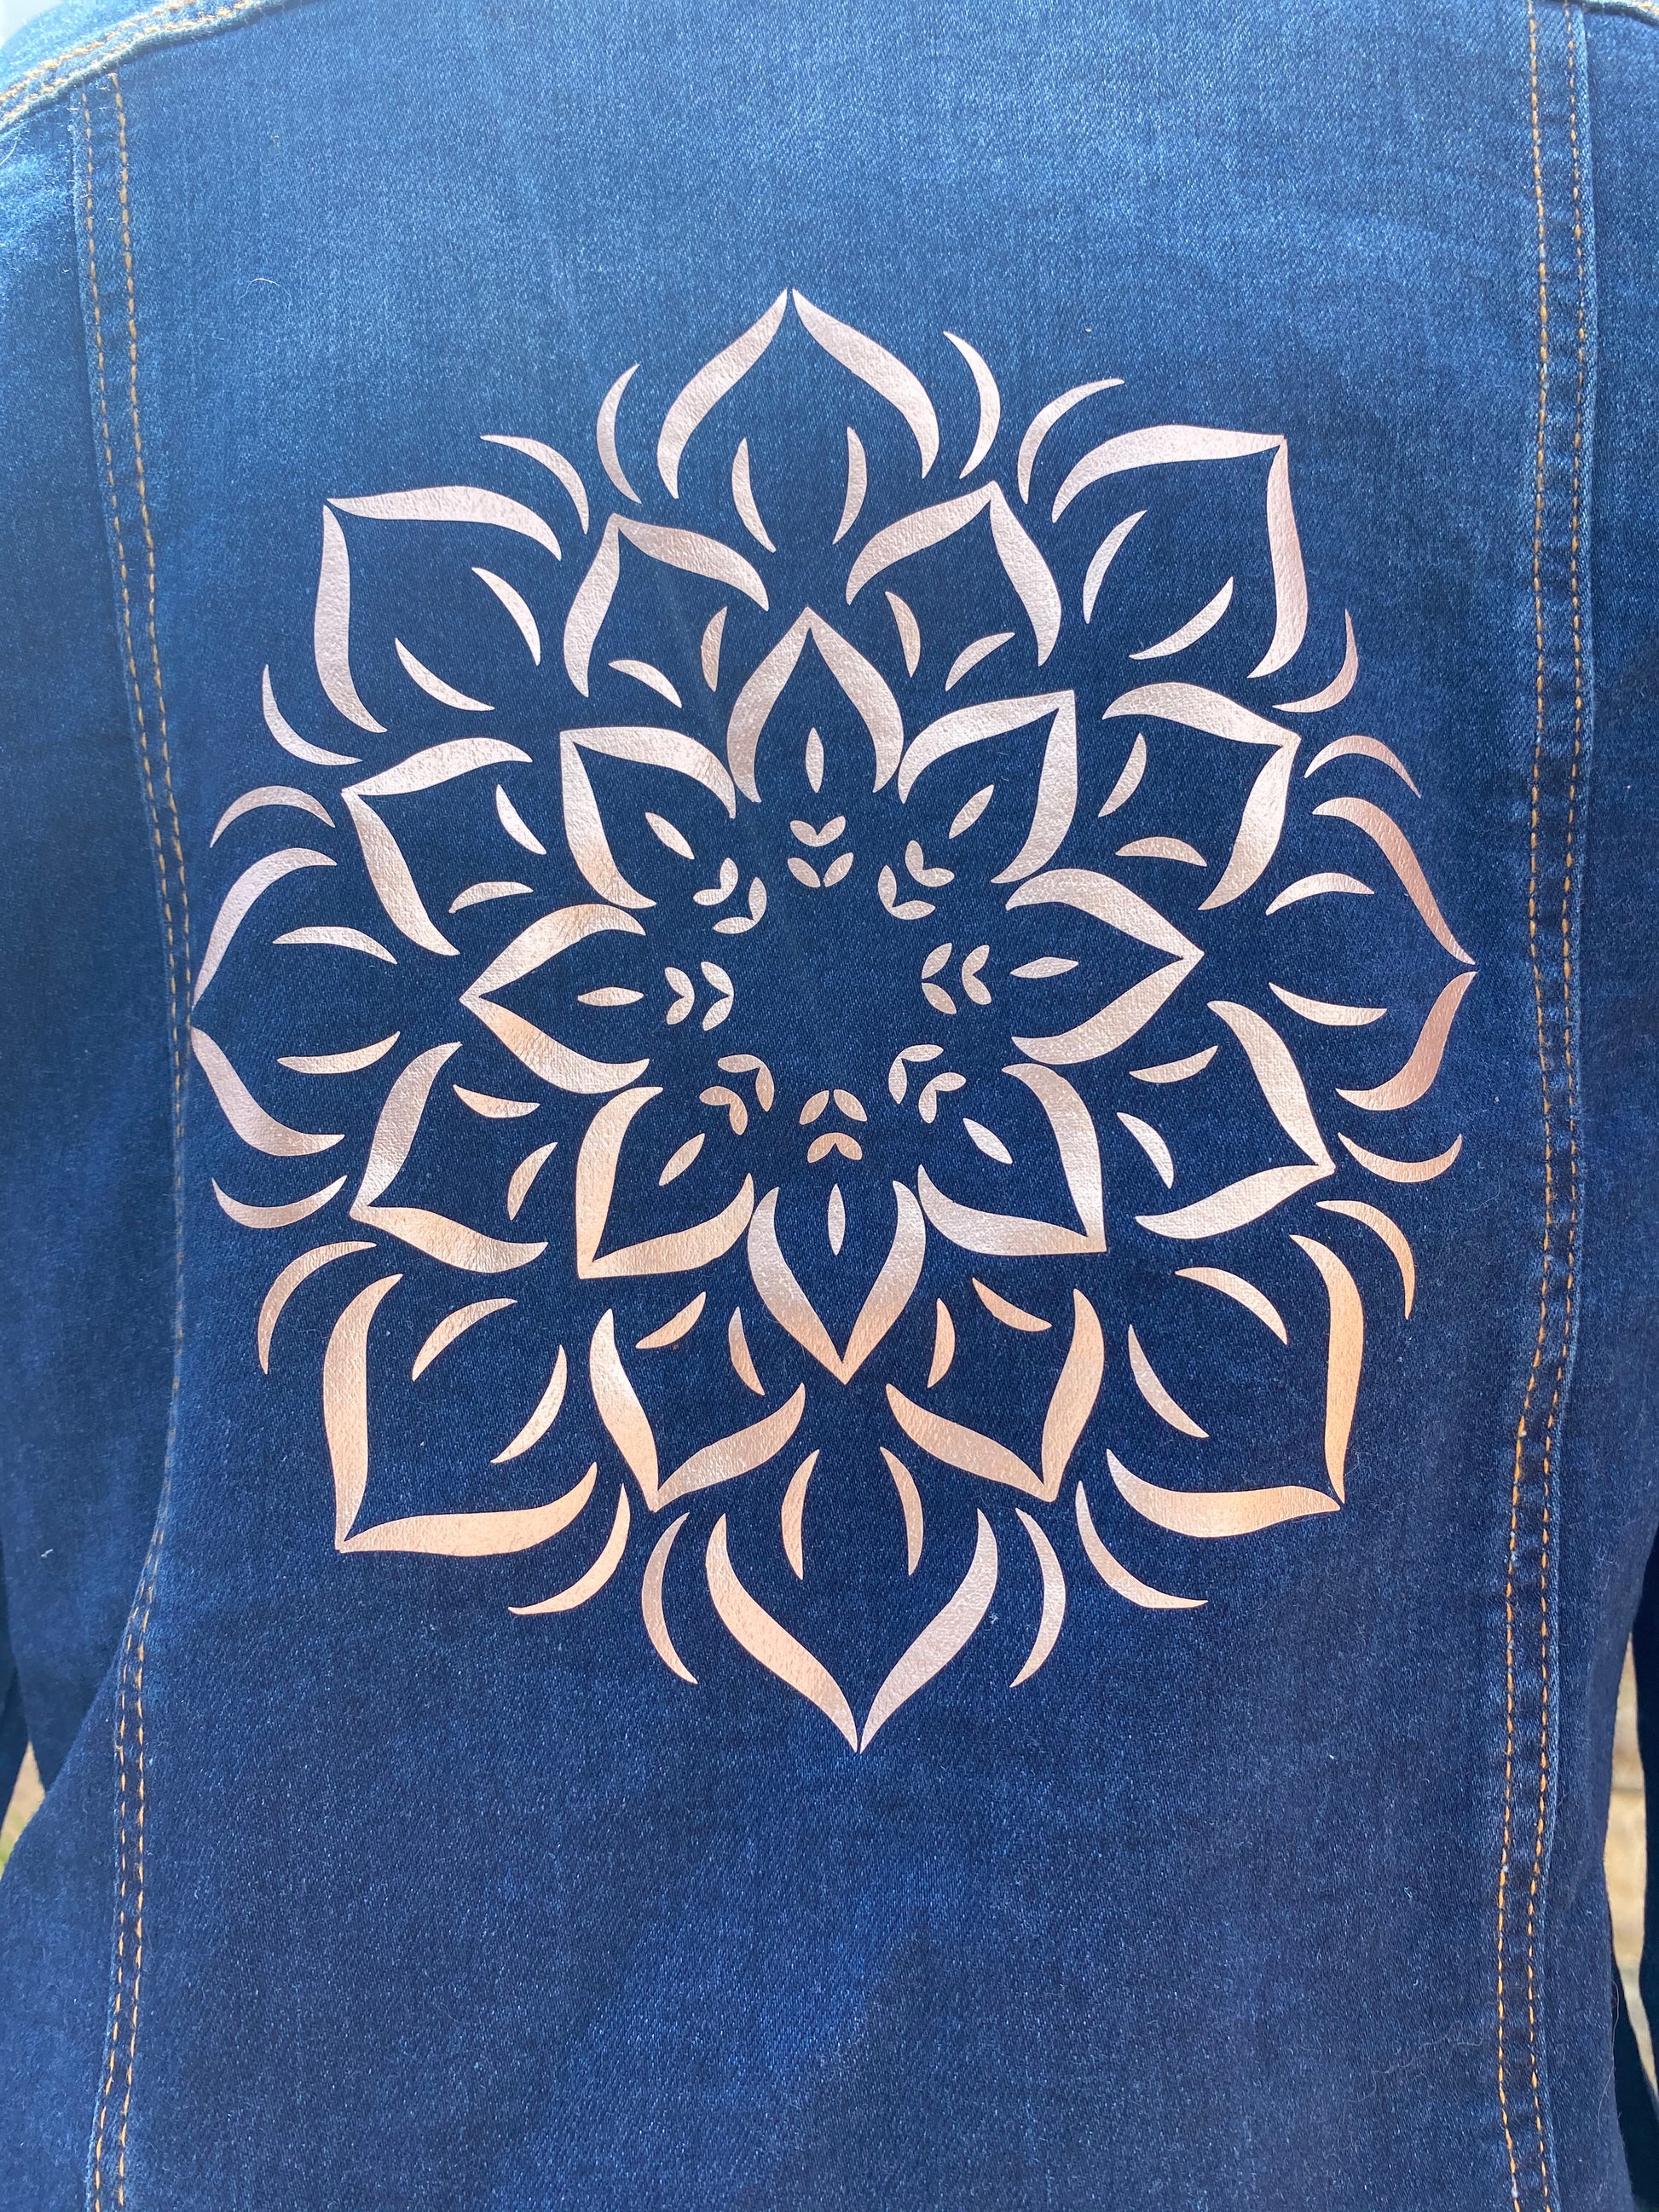 Rose Gold Mandala on Distressed Denim Jacket - Dandelion Lifestyle